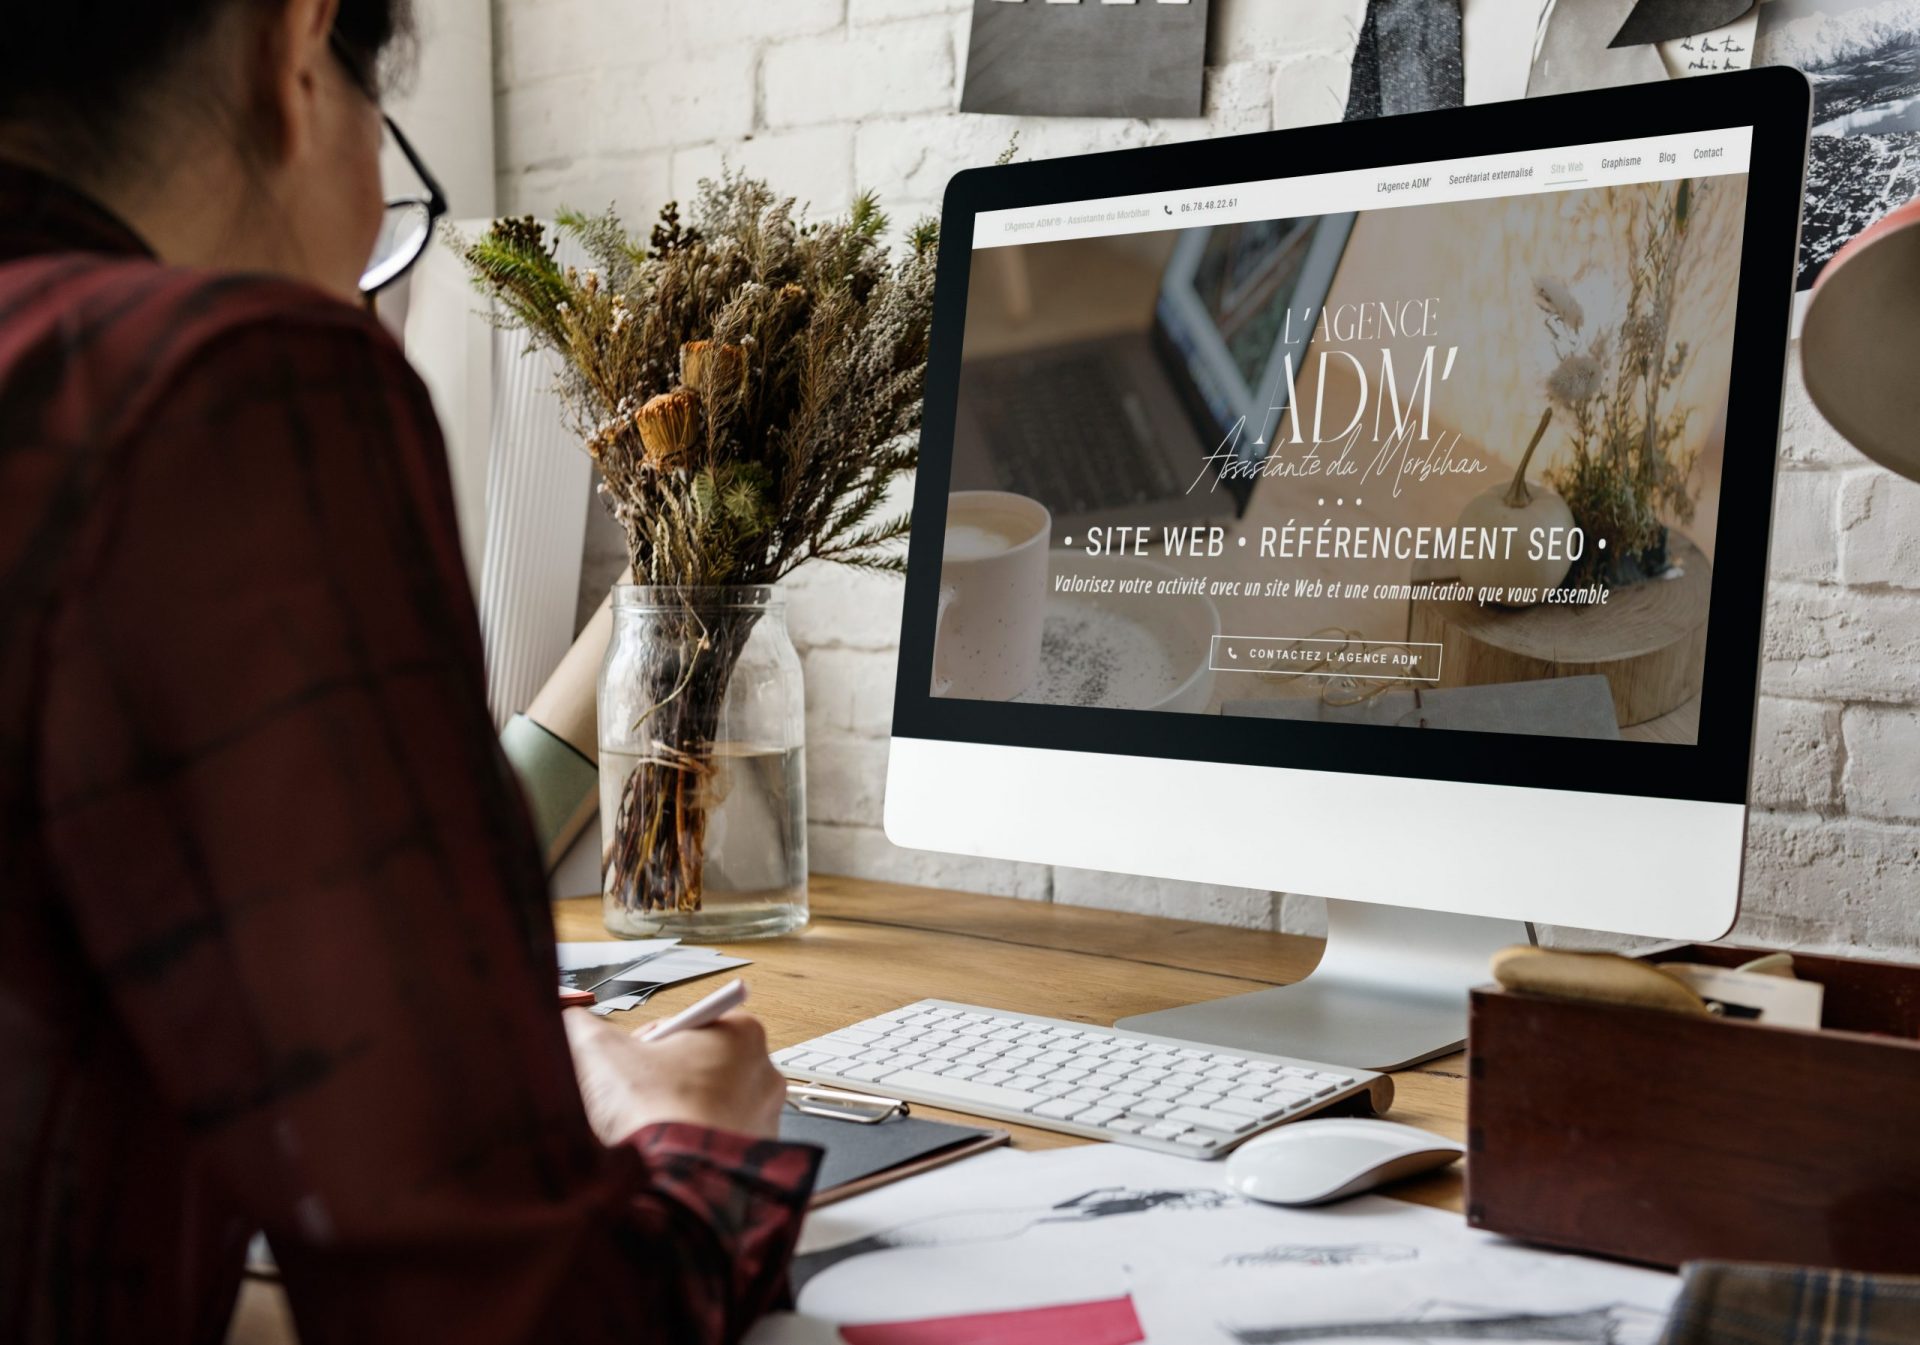 Site Web L'Agence ADM'